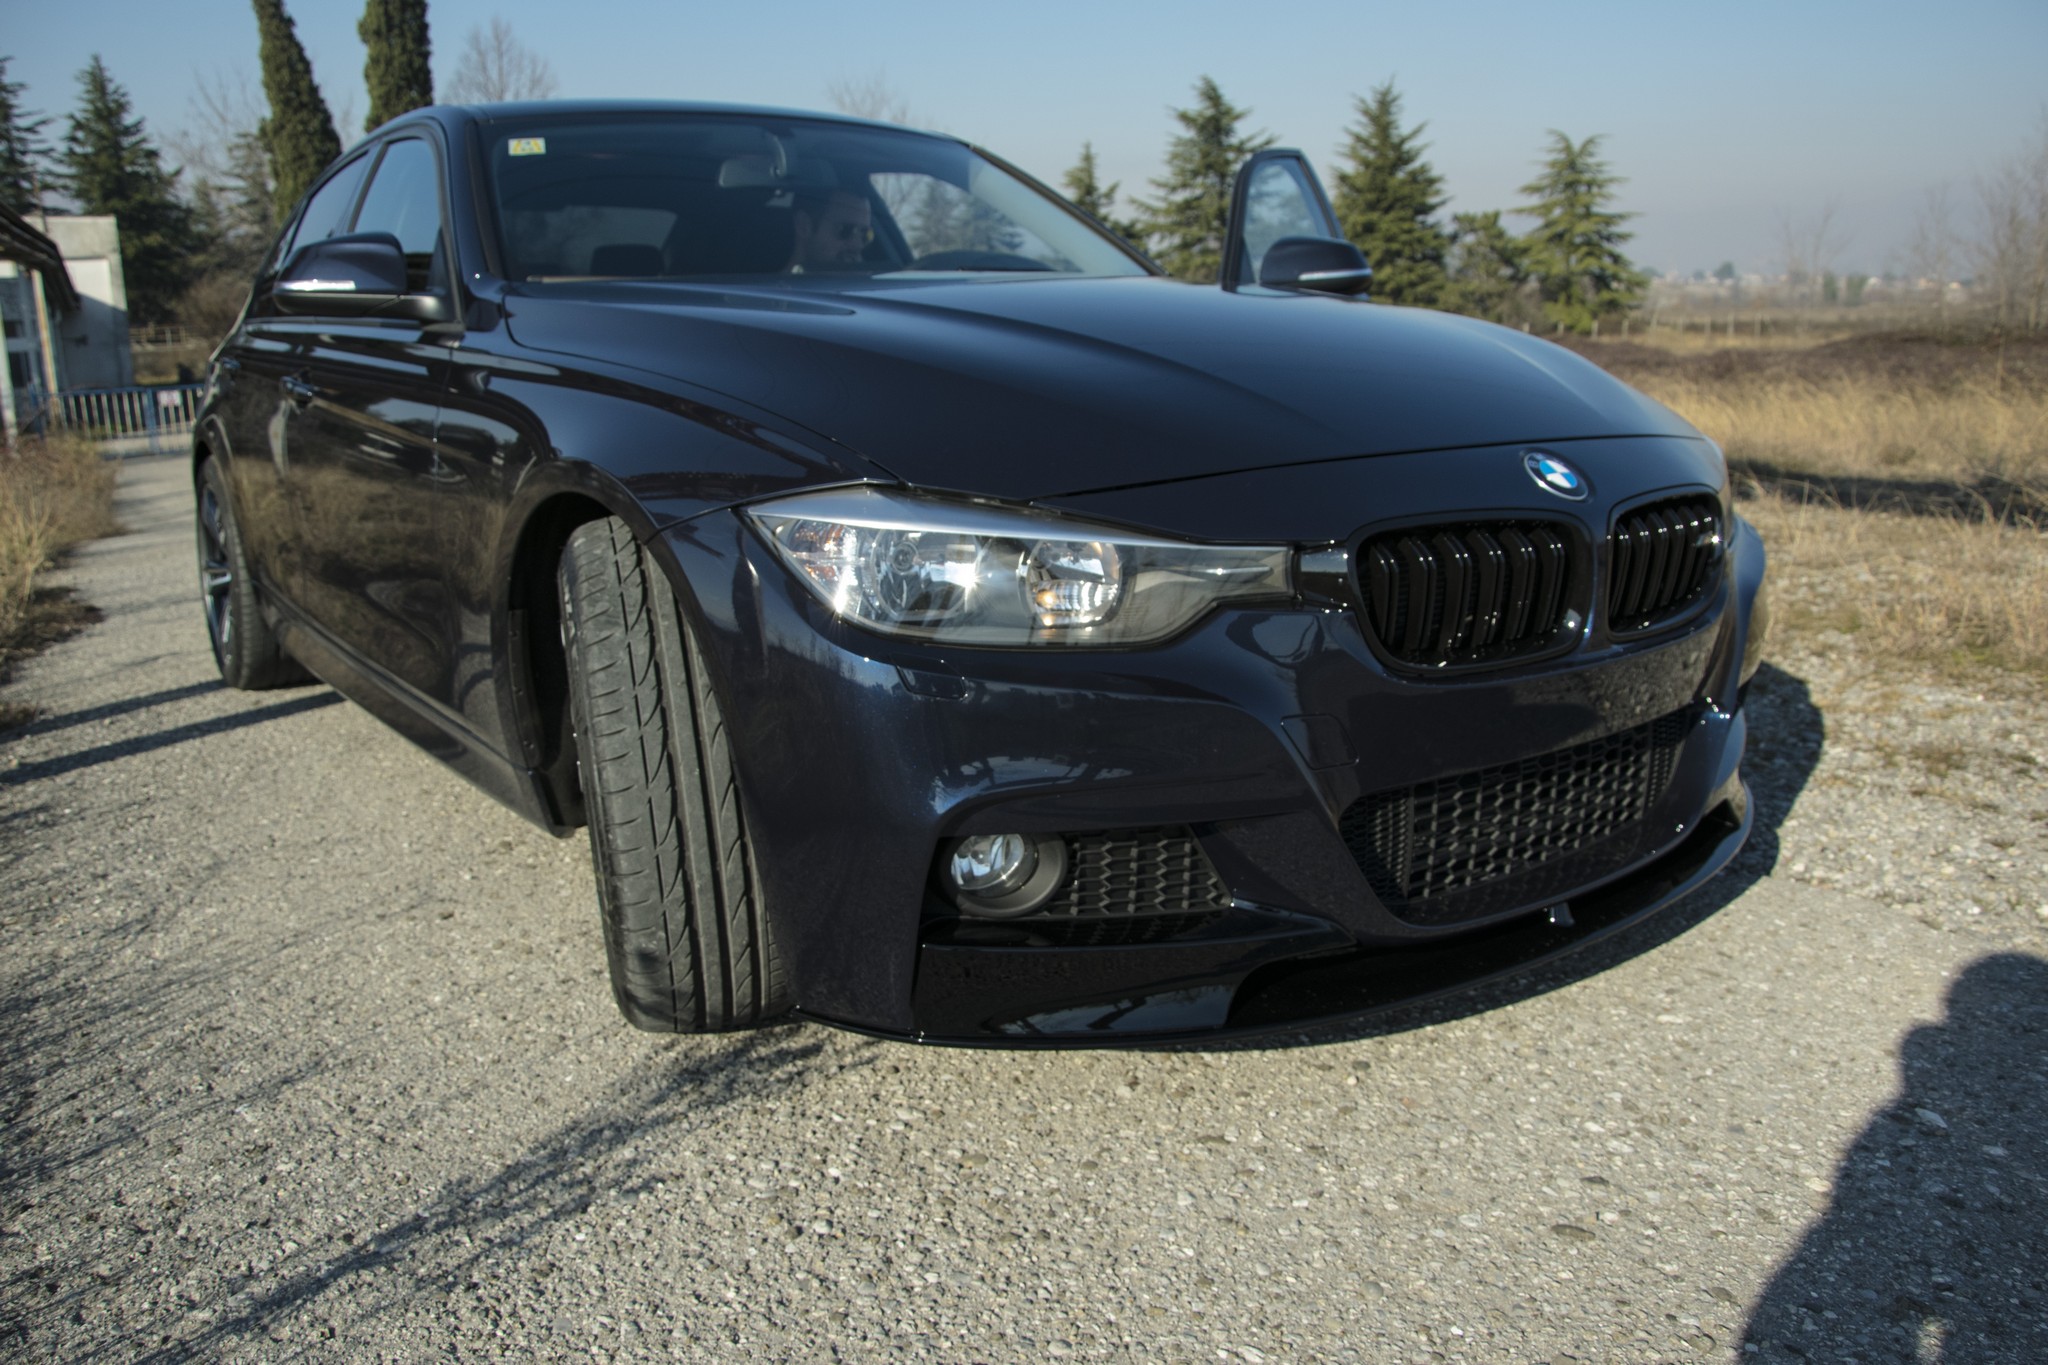 BMW F30 320d M Performance Sport Test by AutoNovosti